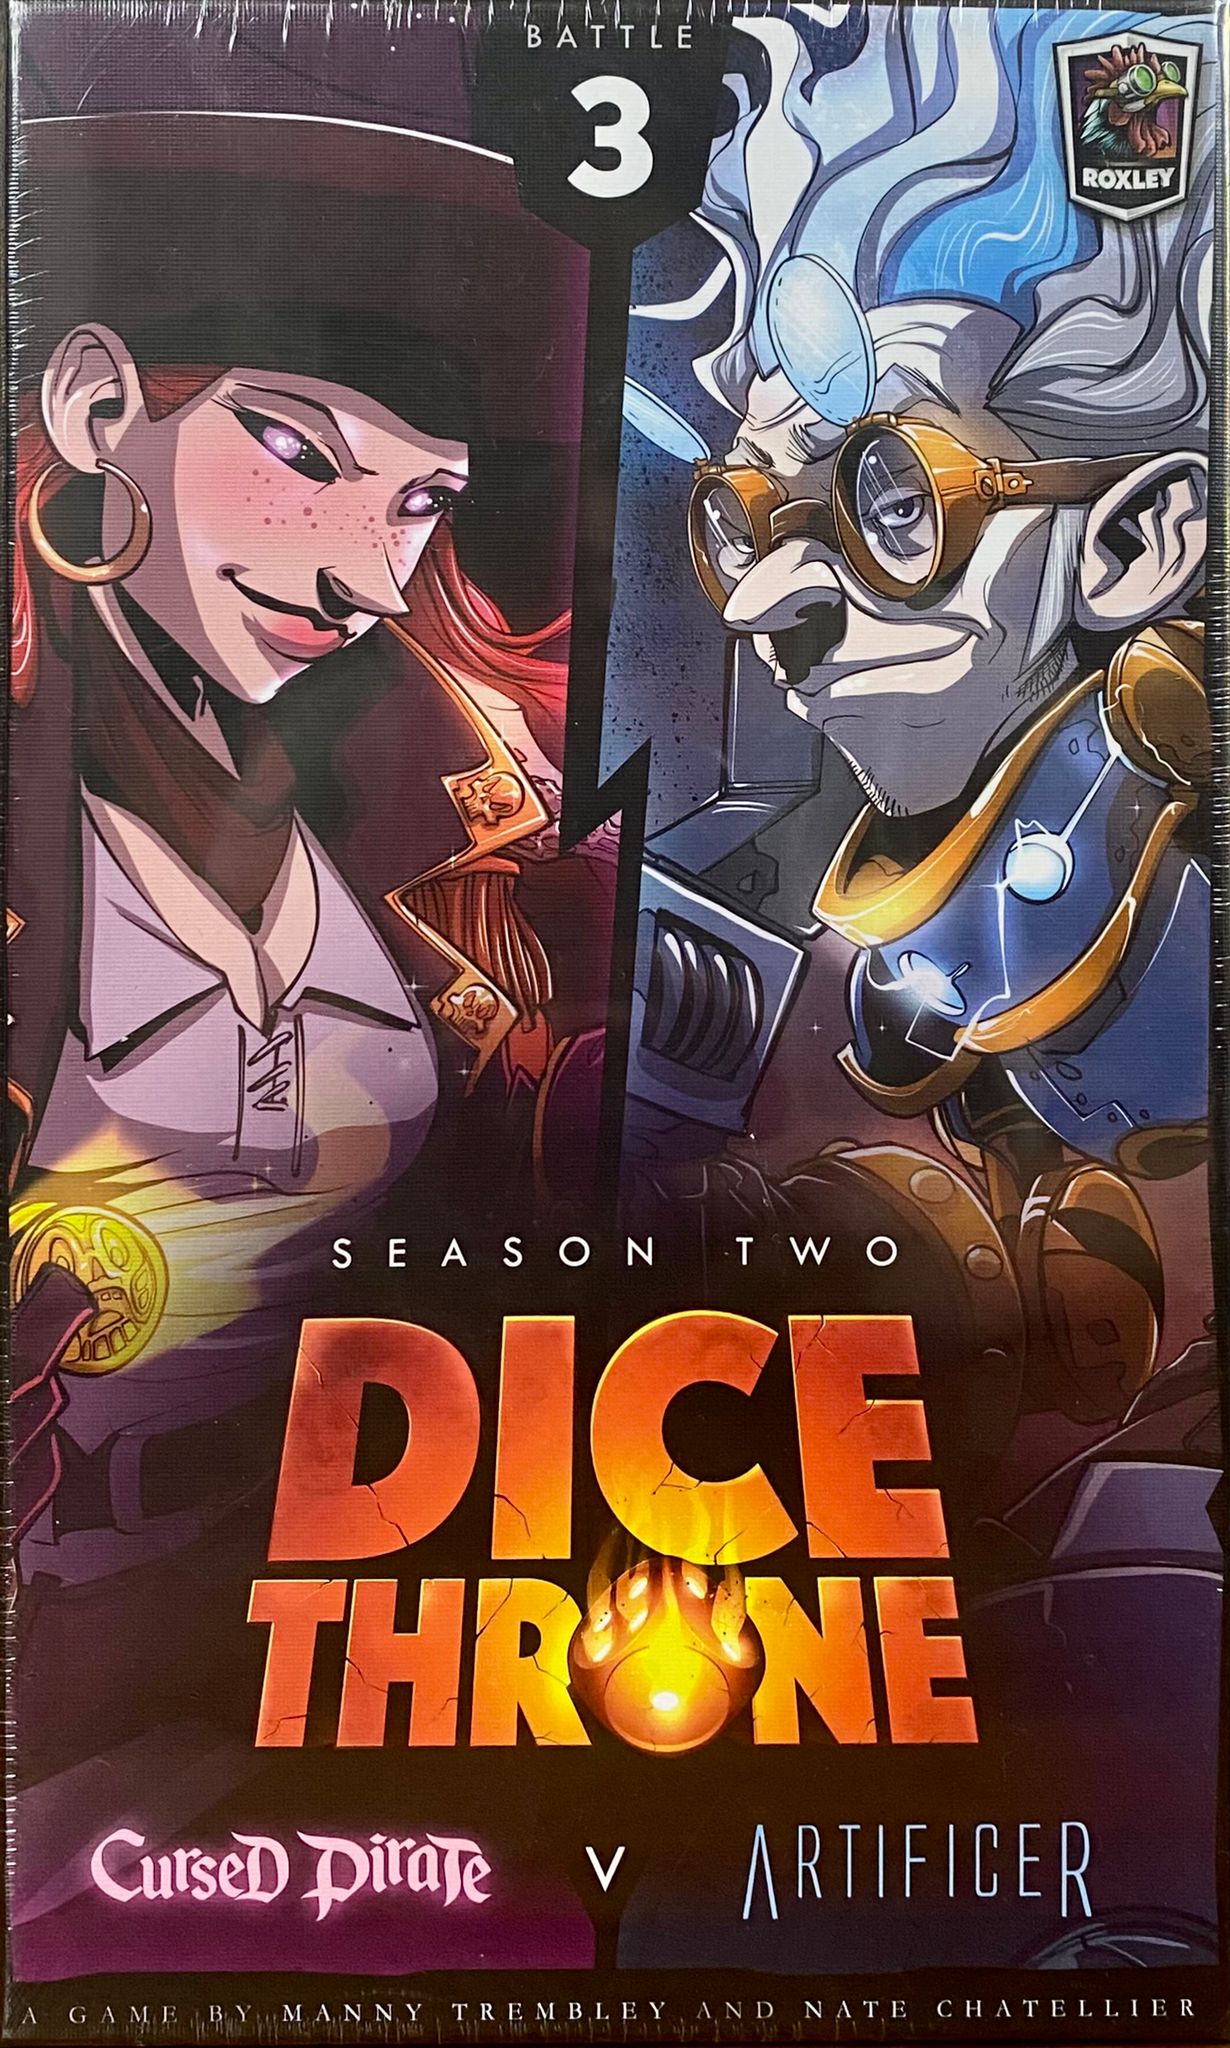 Dice Throne Season Two: Box 3 - Cursed Pirate vs Artificer